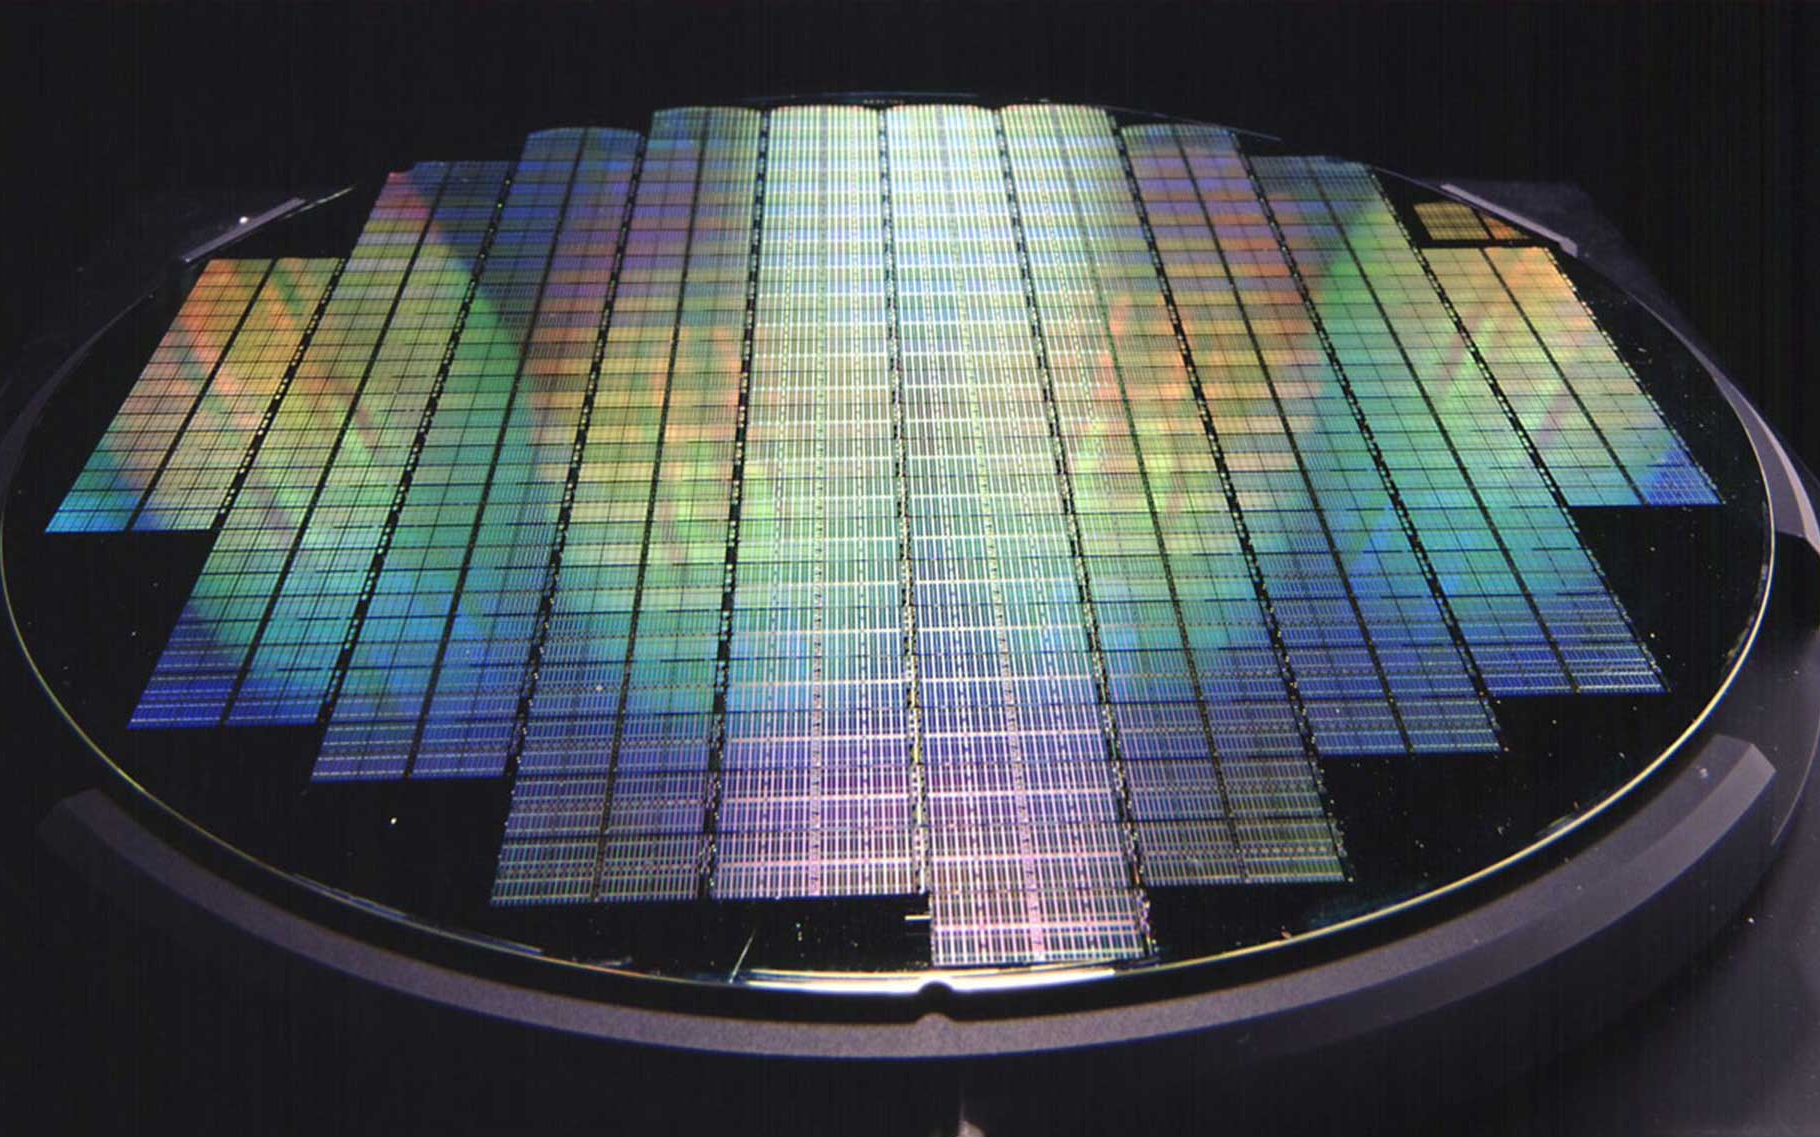 Semiconductor boards